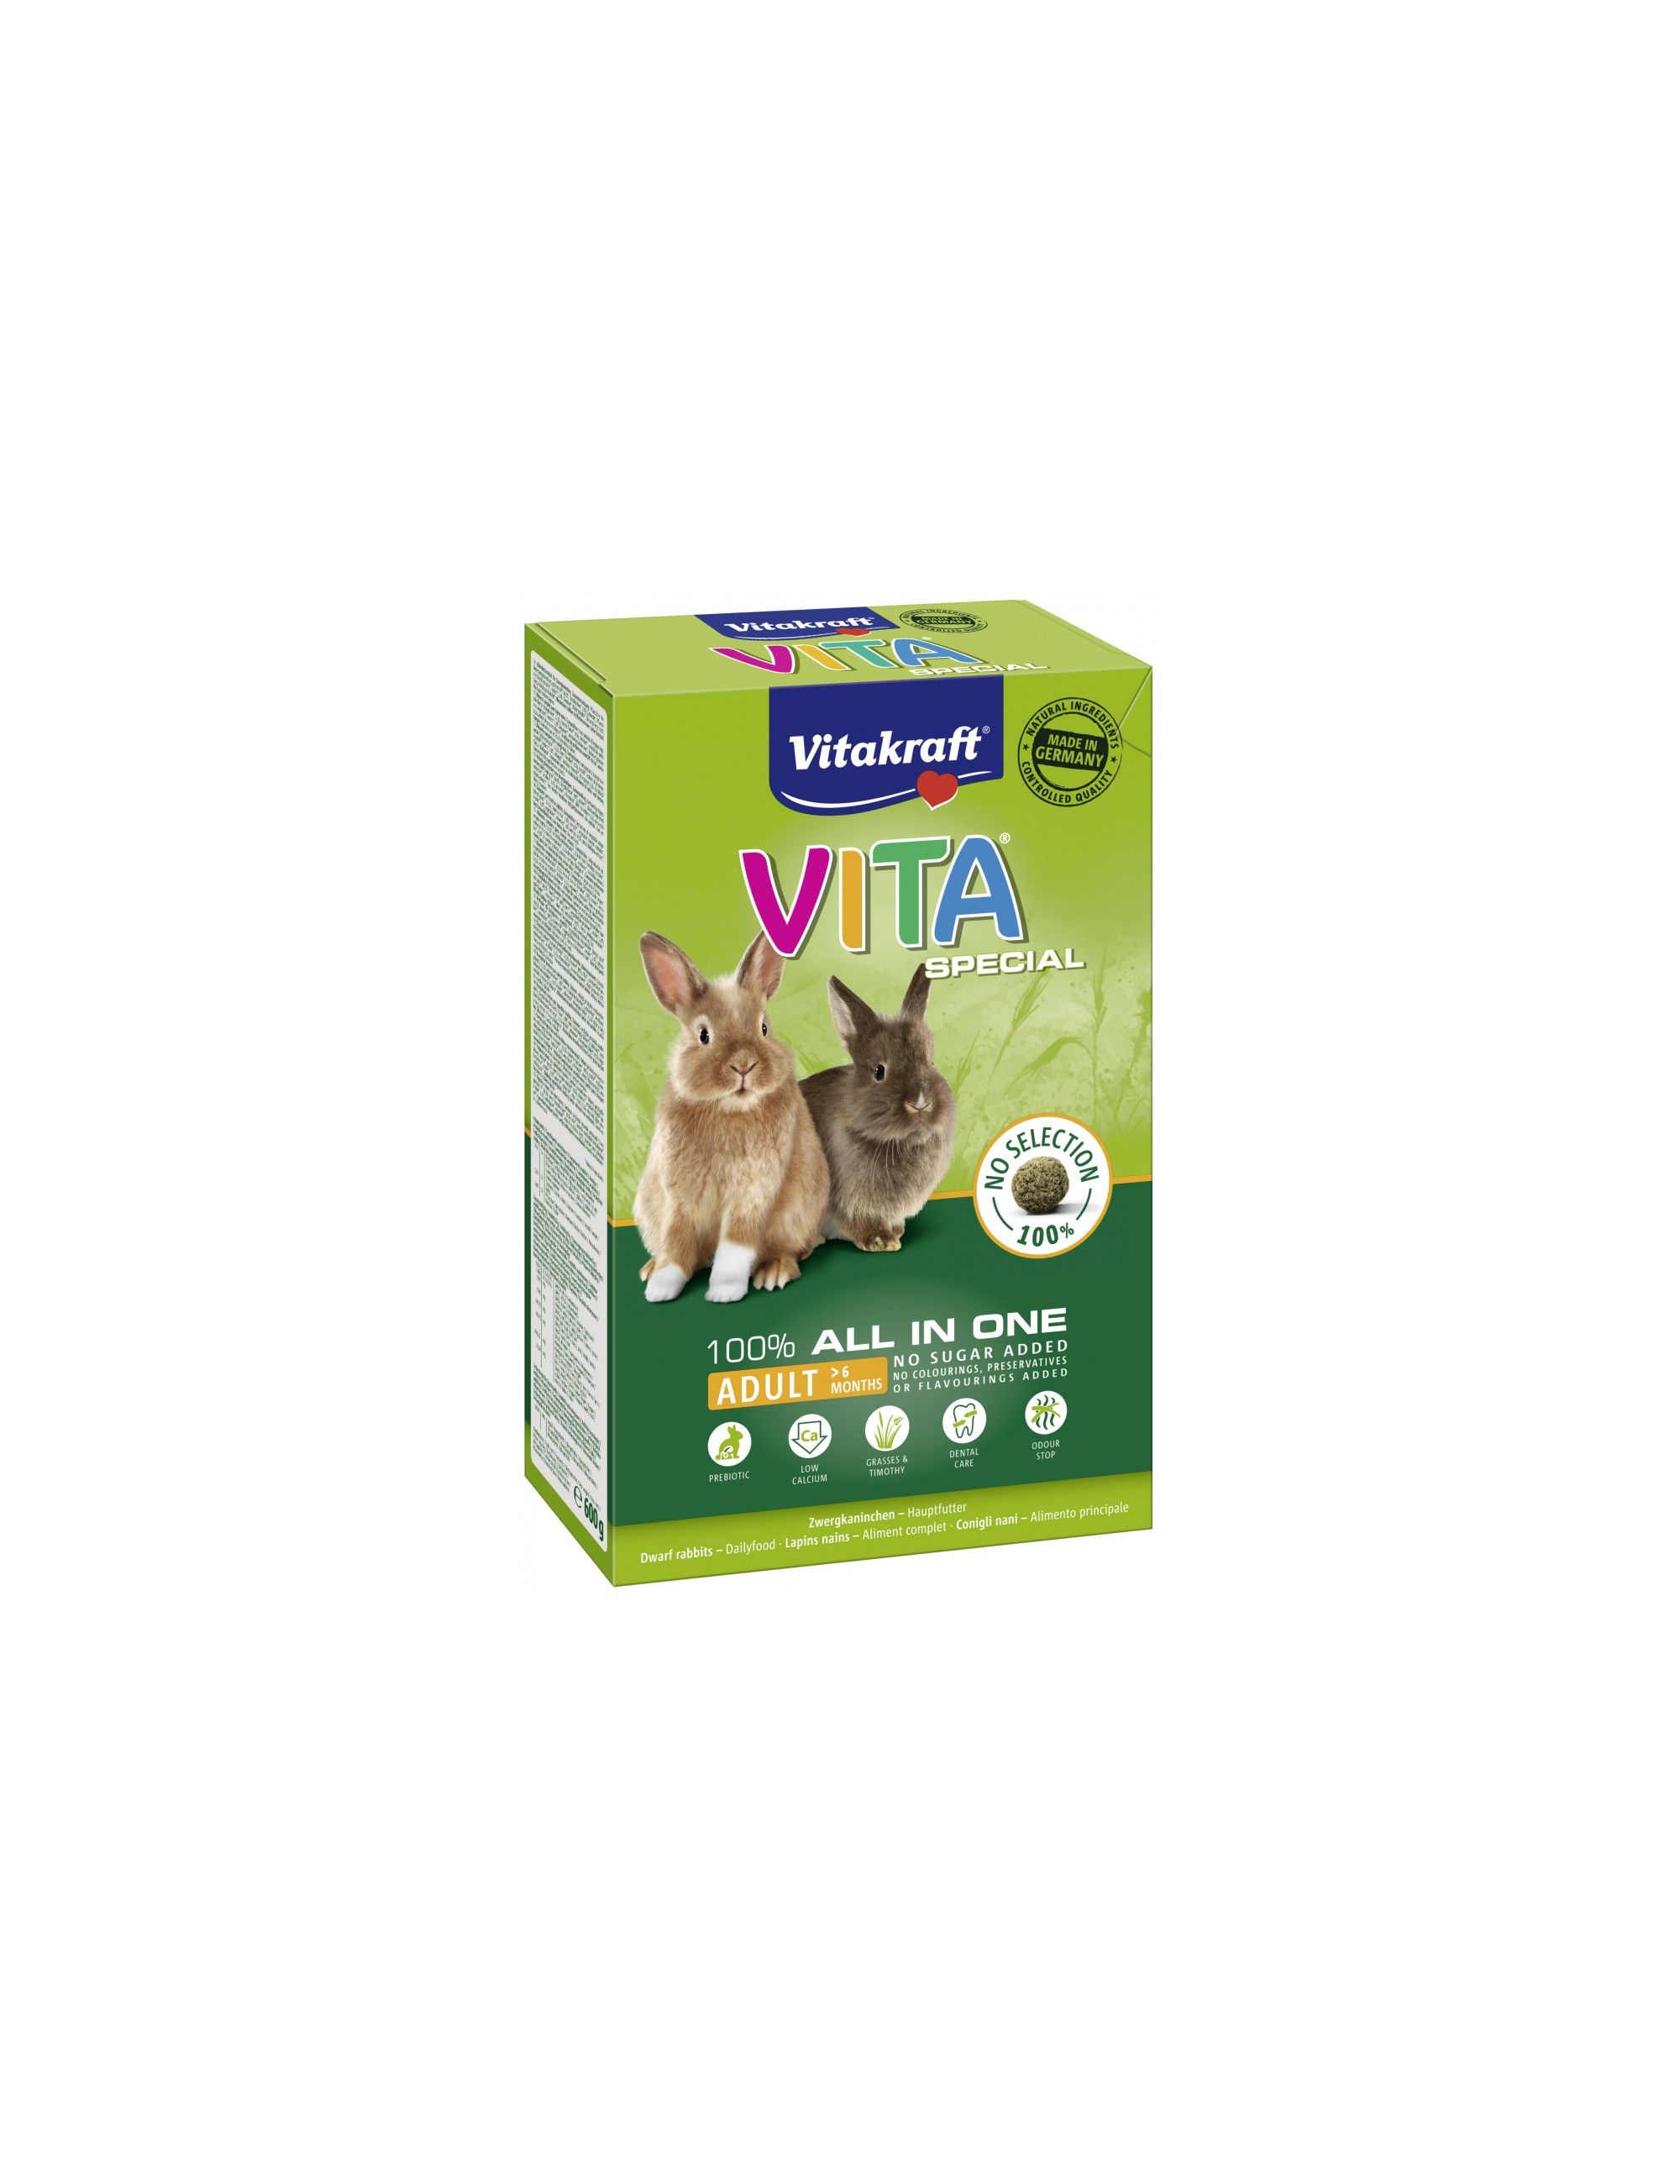 VITAKRAFT - Vita Special Rabbit Adult